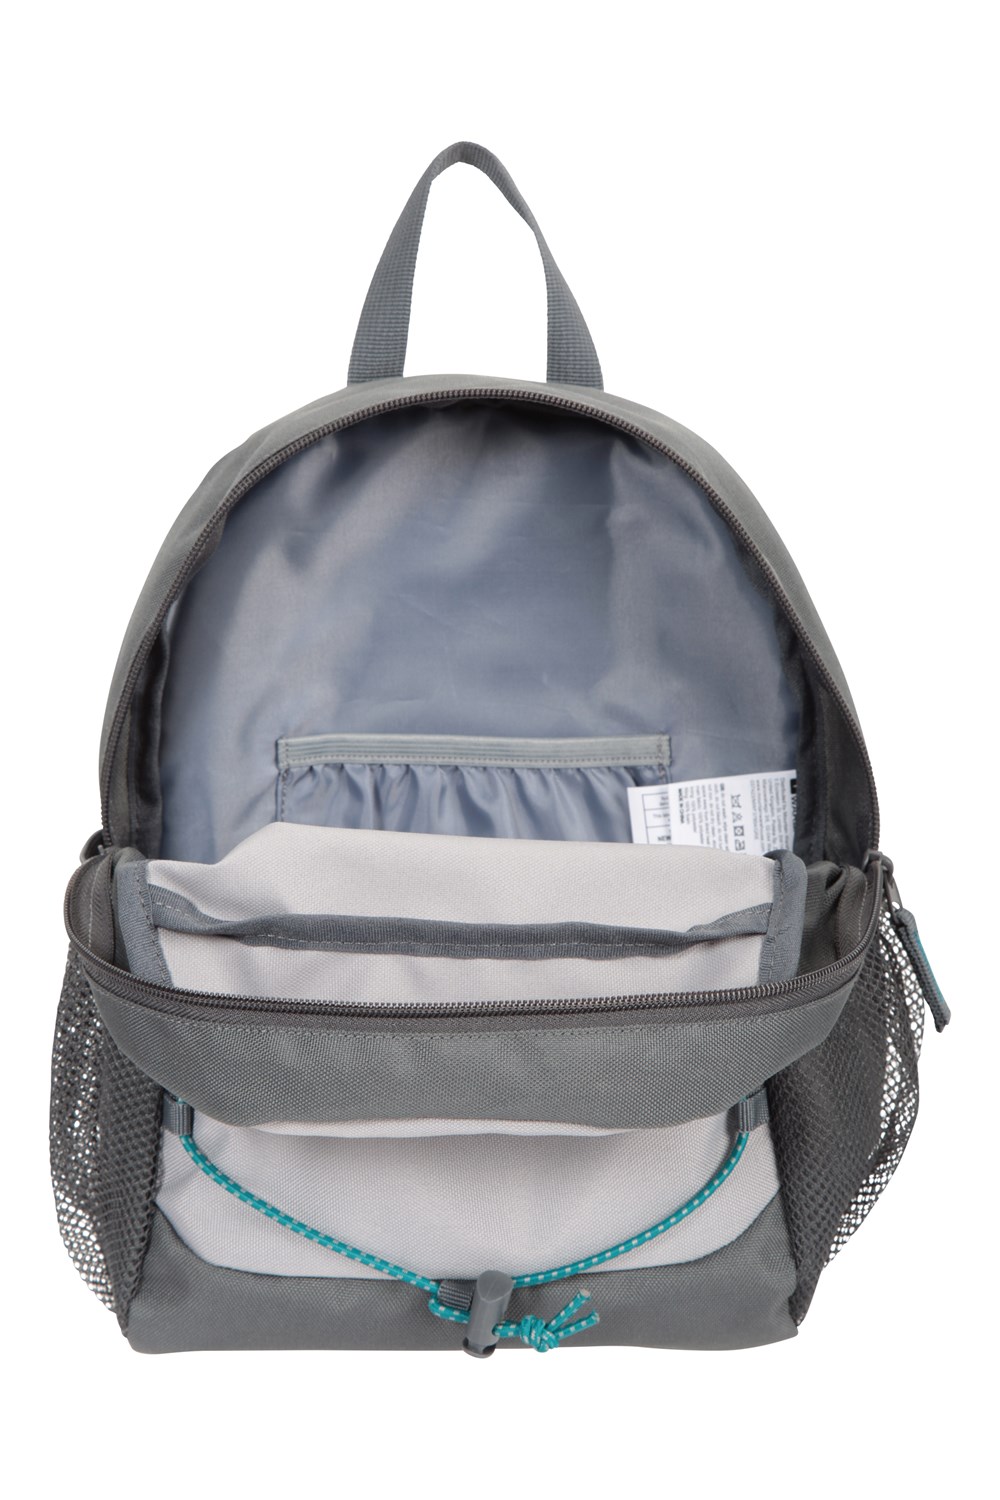 Mountain Warehouse Walklet Rucksack Casual Adjustable Everyday Bag ...